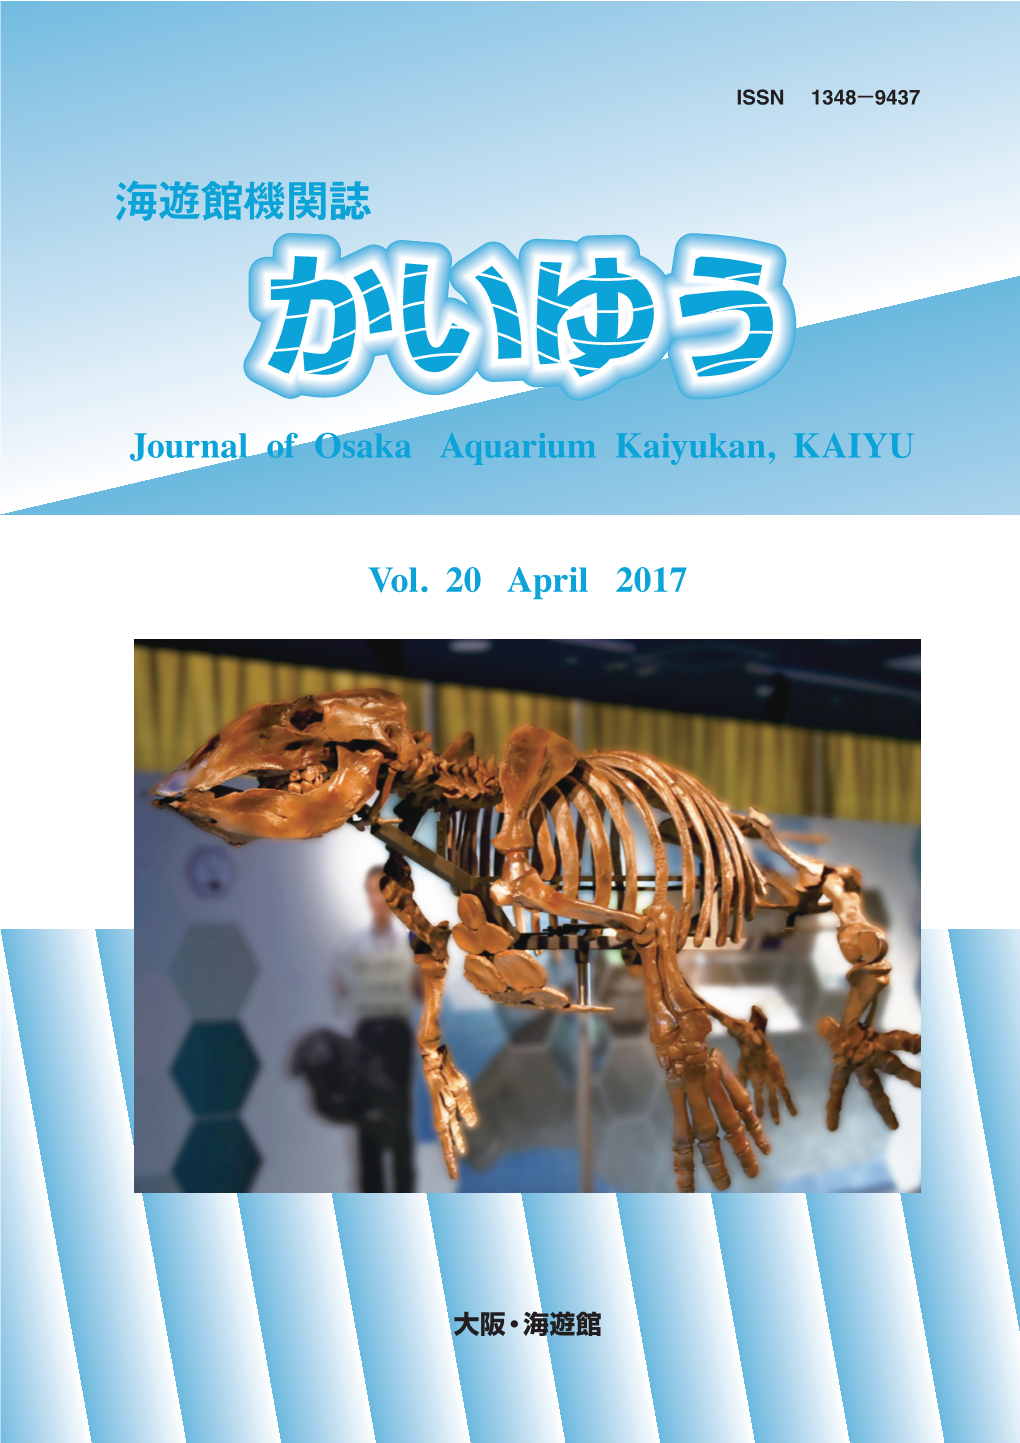 Journal of Osaka Aquarium Kaiyukan, KAIYU Vol. 20 April 2017